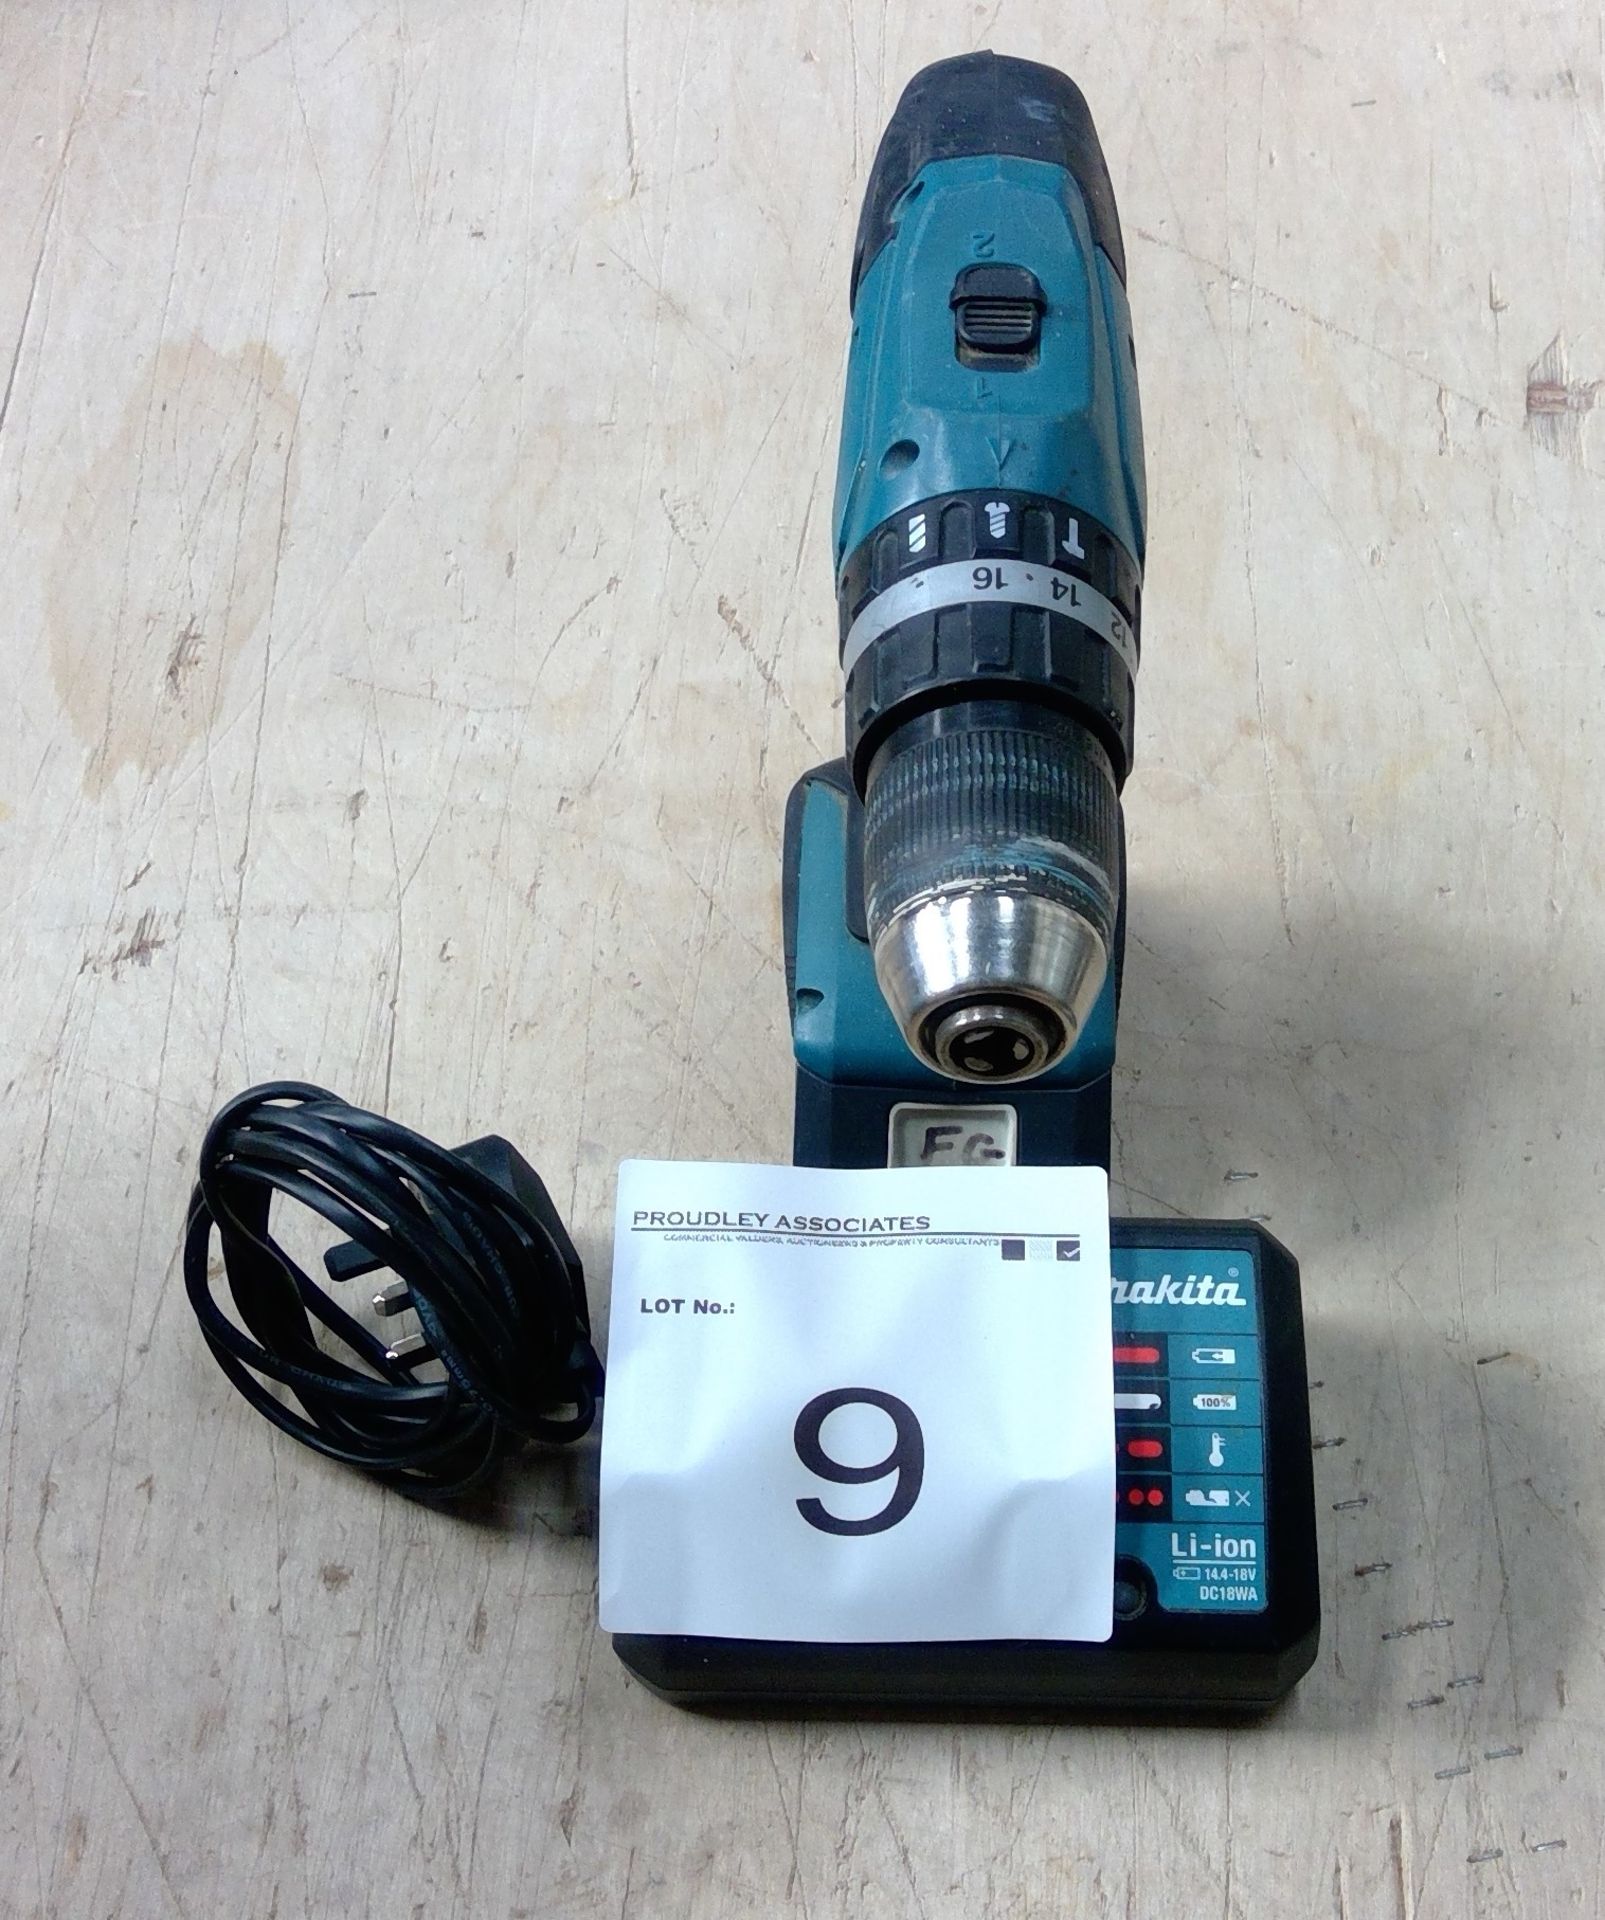 Makita 18v cordless drill with 3.0 Ah battery and charger